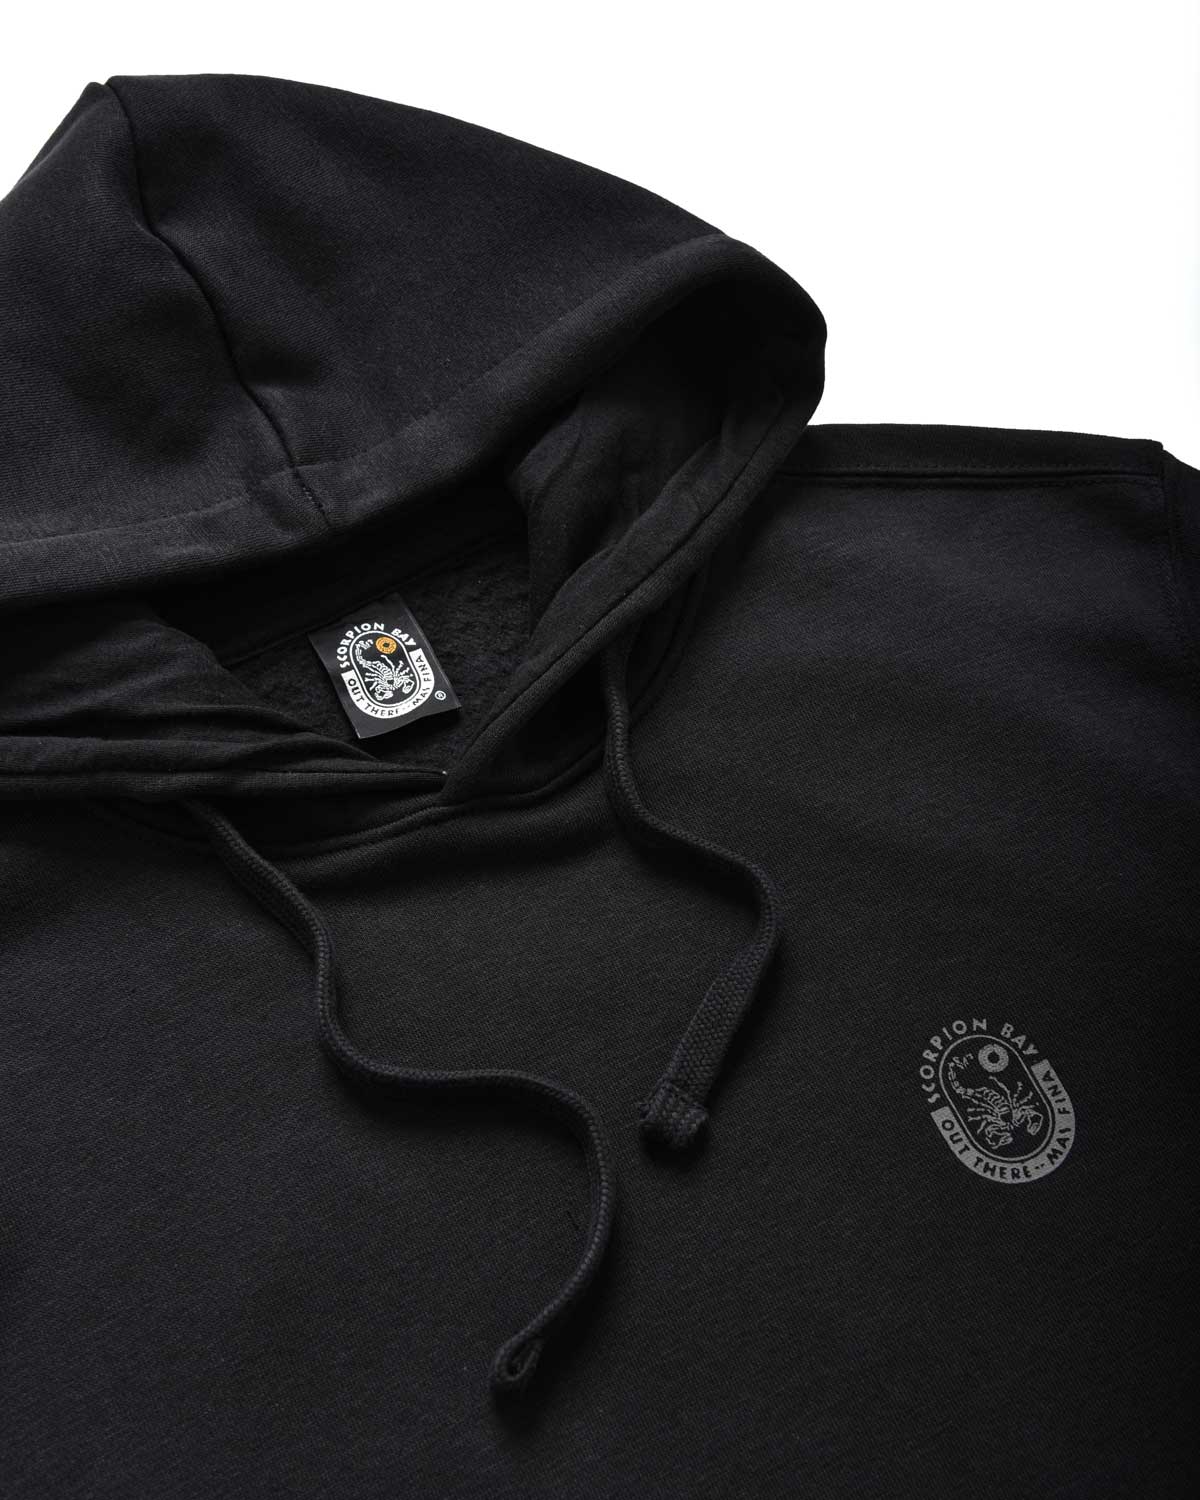 Man | Black Sweatshirt With Hood And "Skull Wave" Print